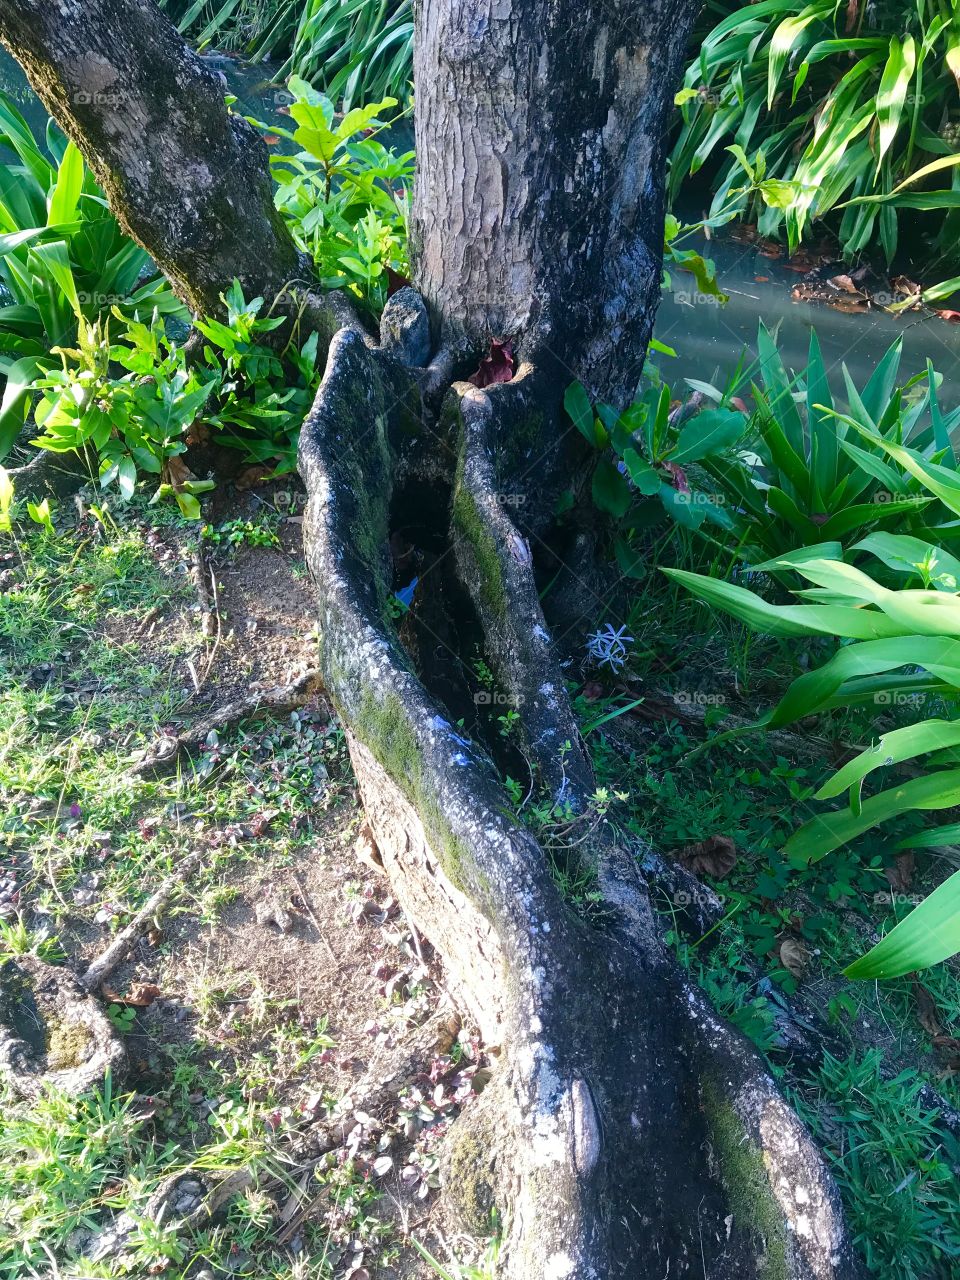 Unique tree root